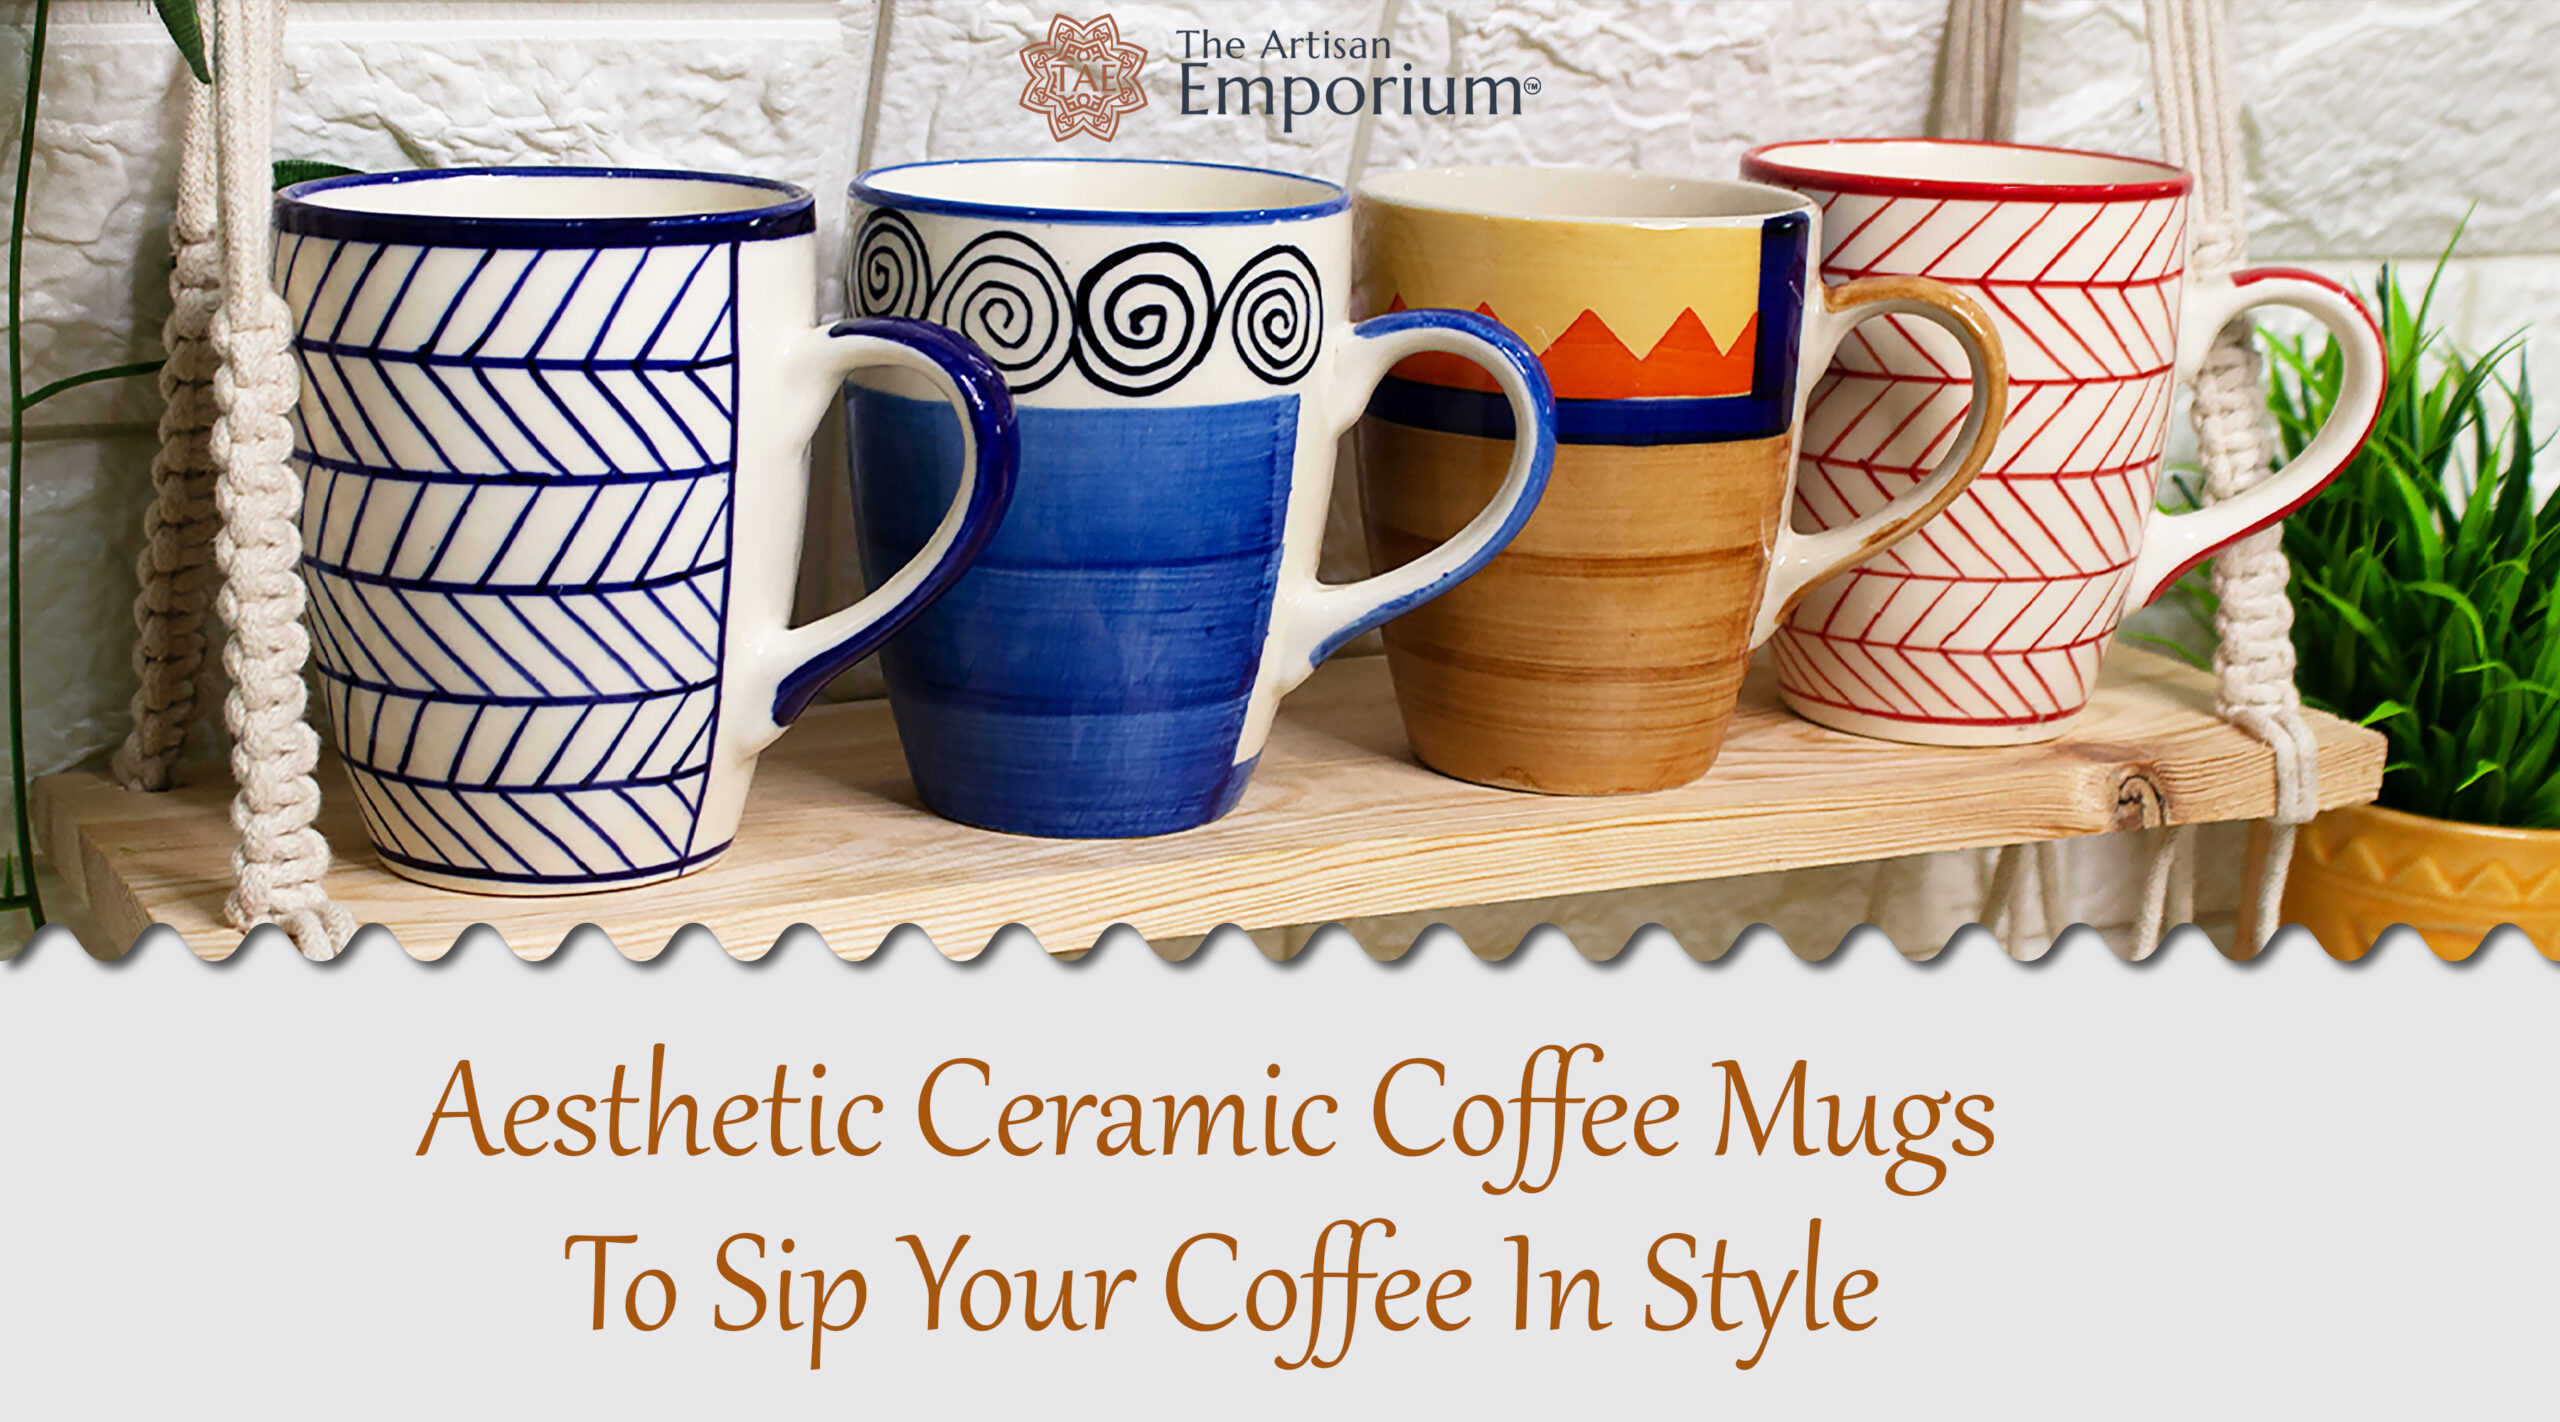 The Artisan Emporium Ceramic Coffee Mugs